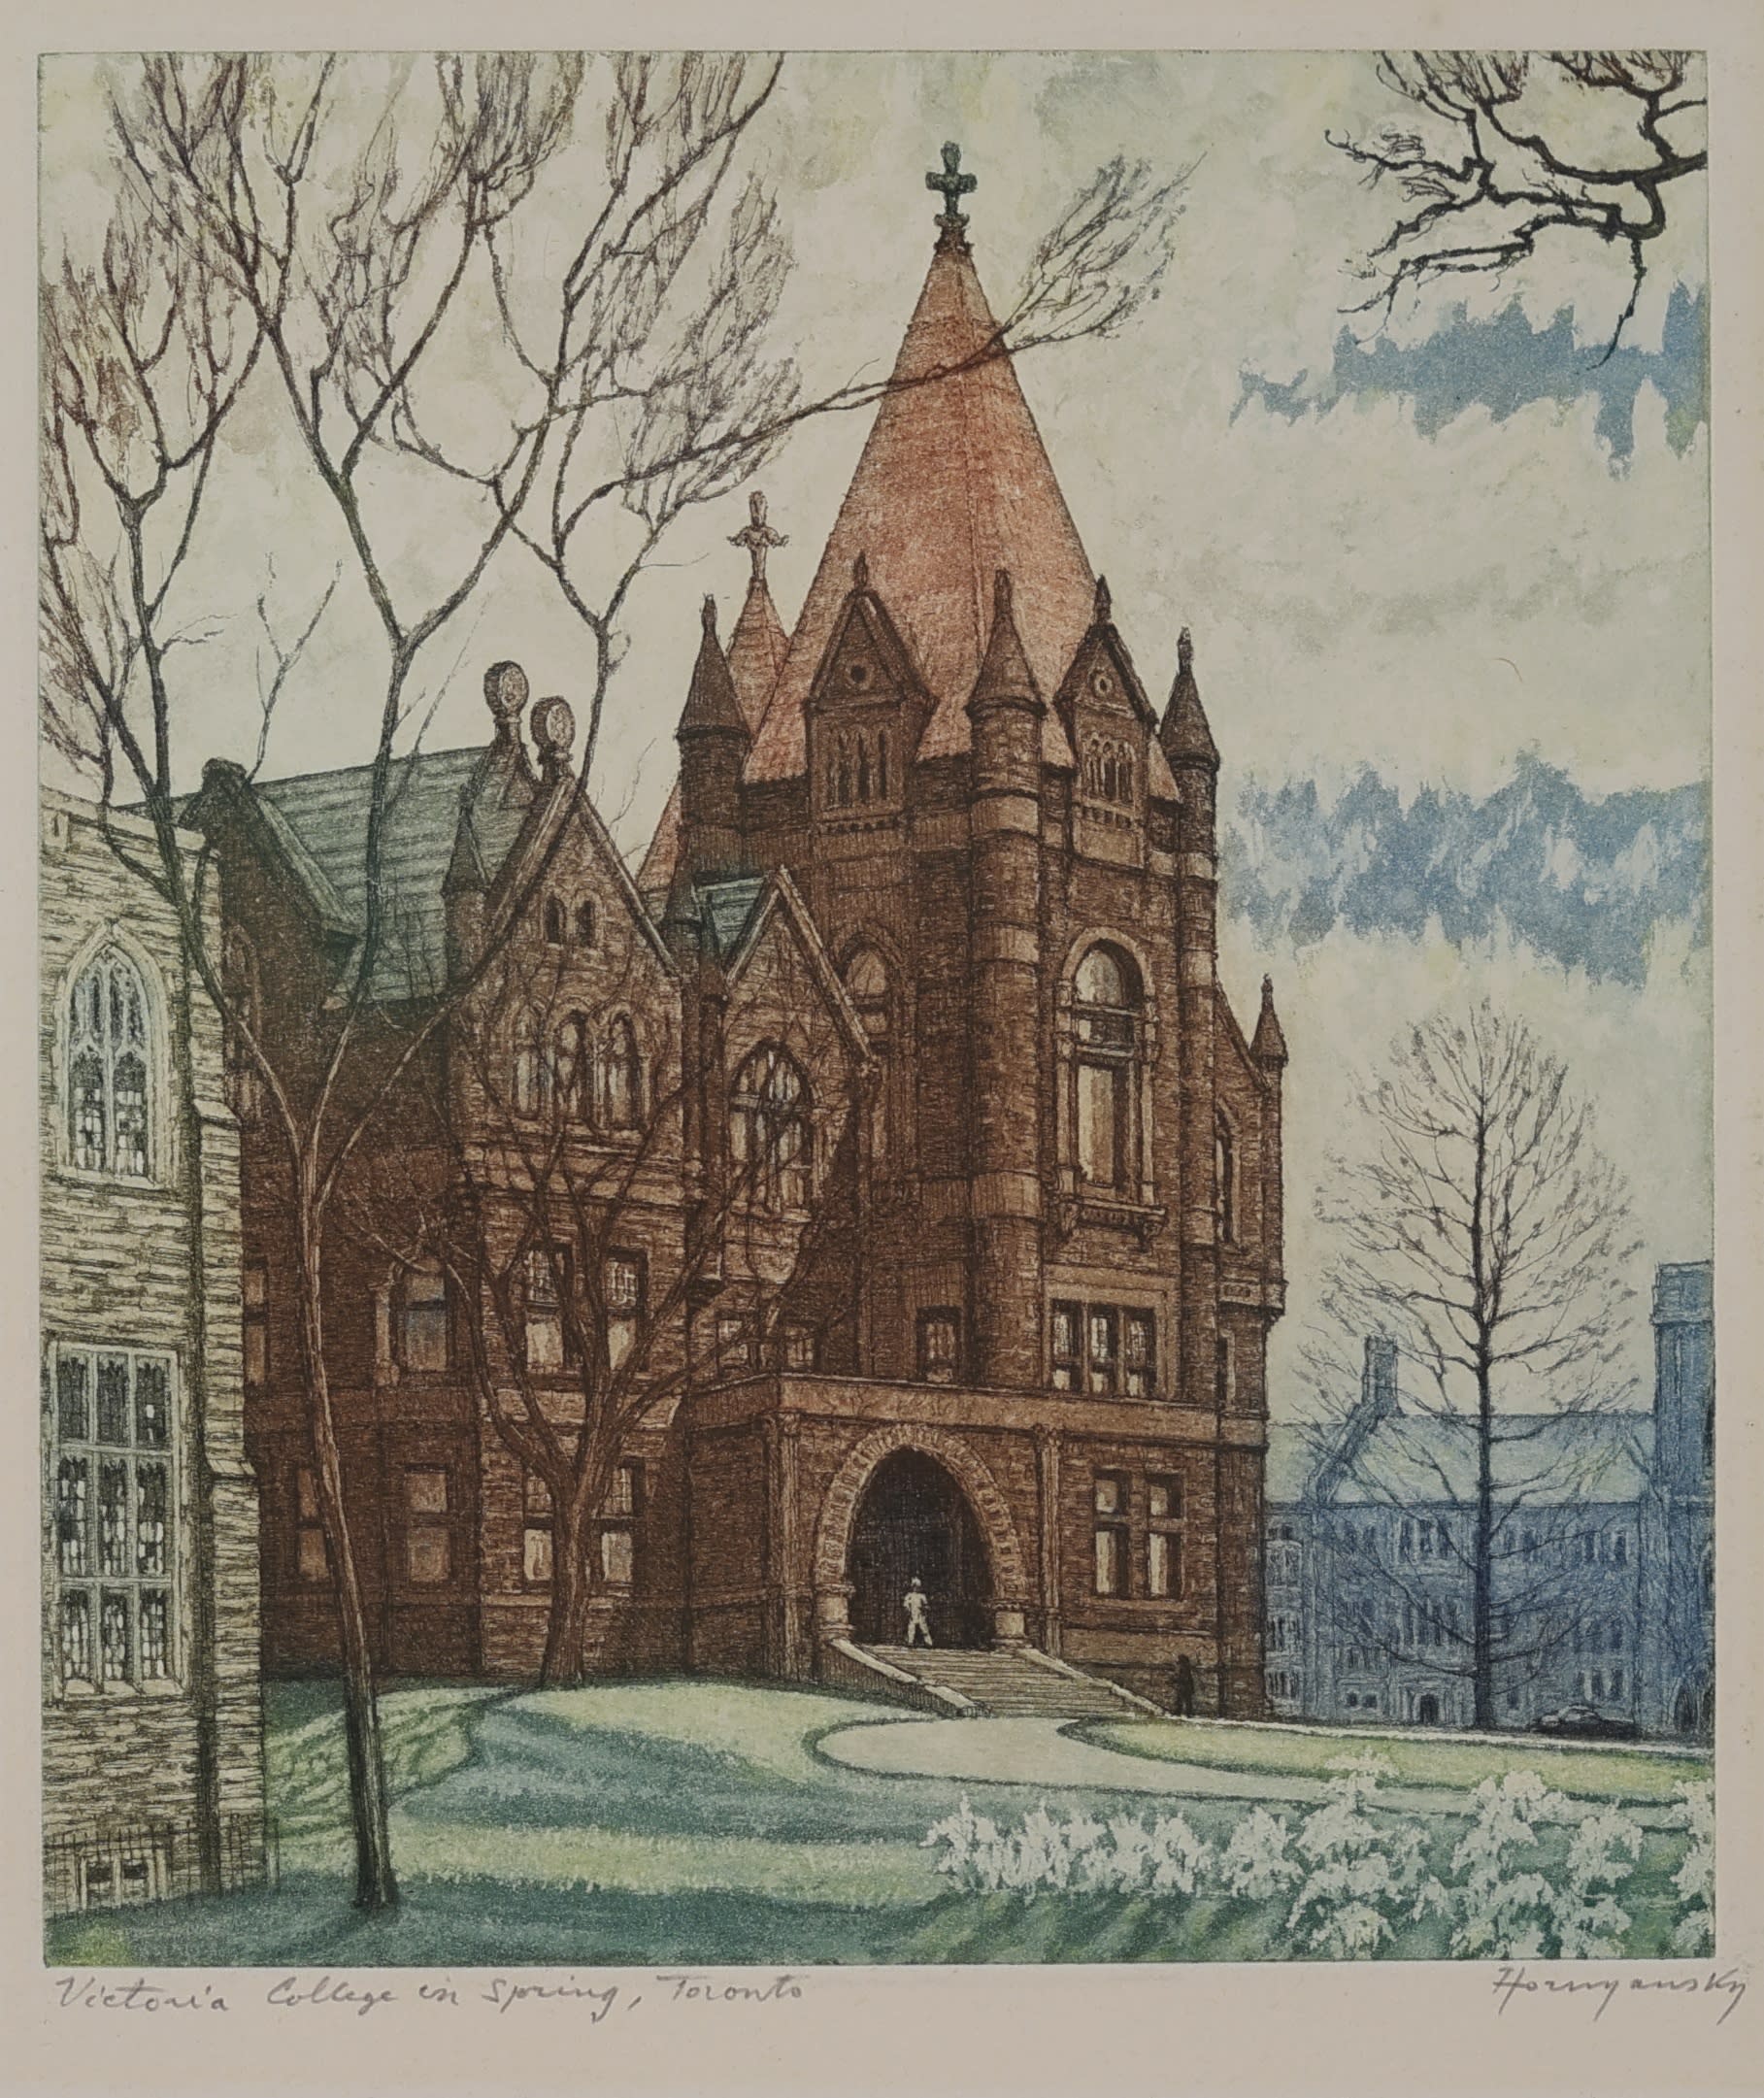 Nicholas Hornyansky; Victoria College in Spring, Toronto